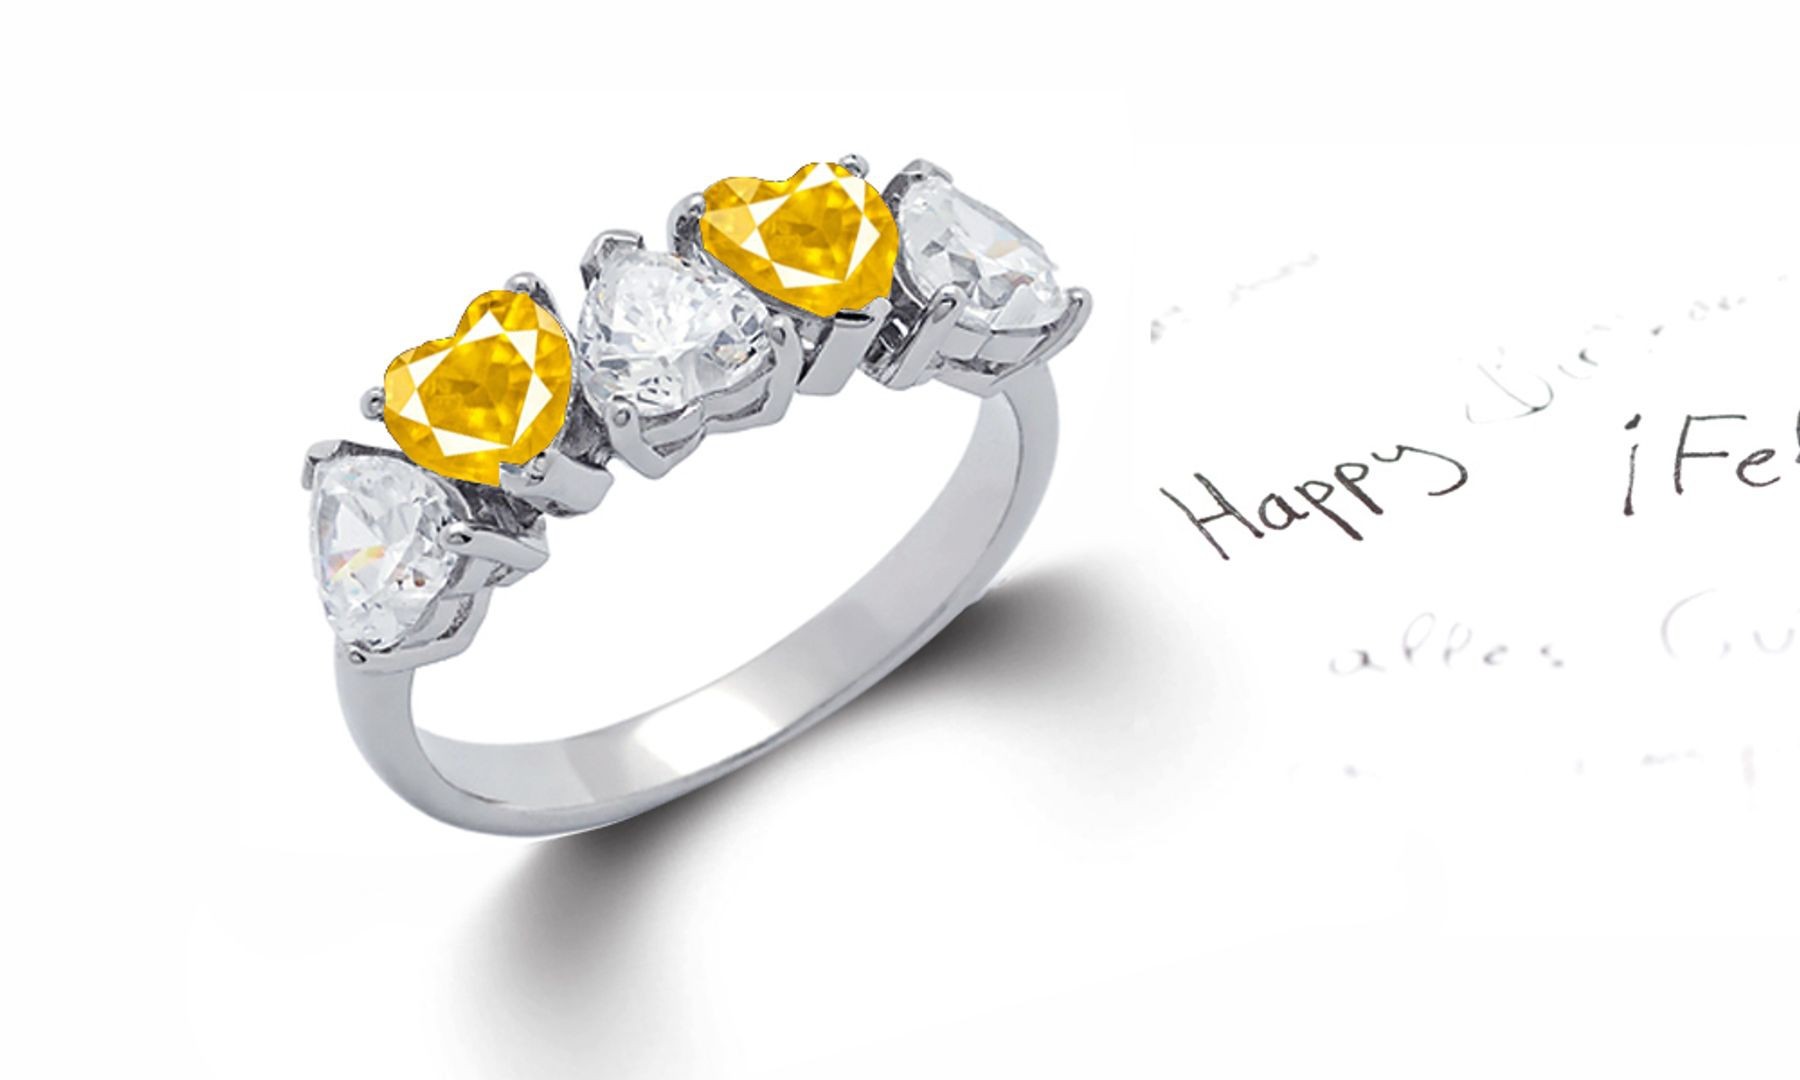 Made to Order 5 Stone Heart Shaped Diamonds & Yellow Sapphires Anniversary Rings